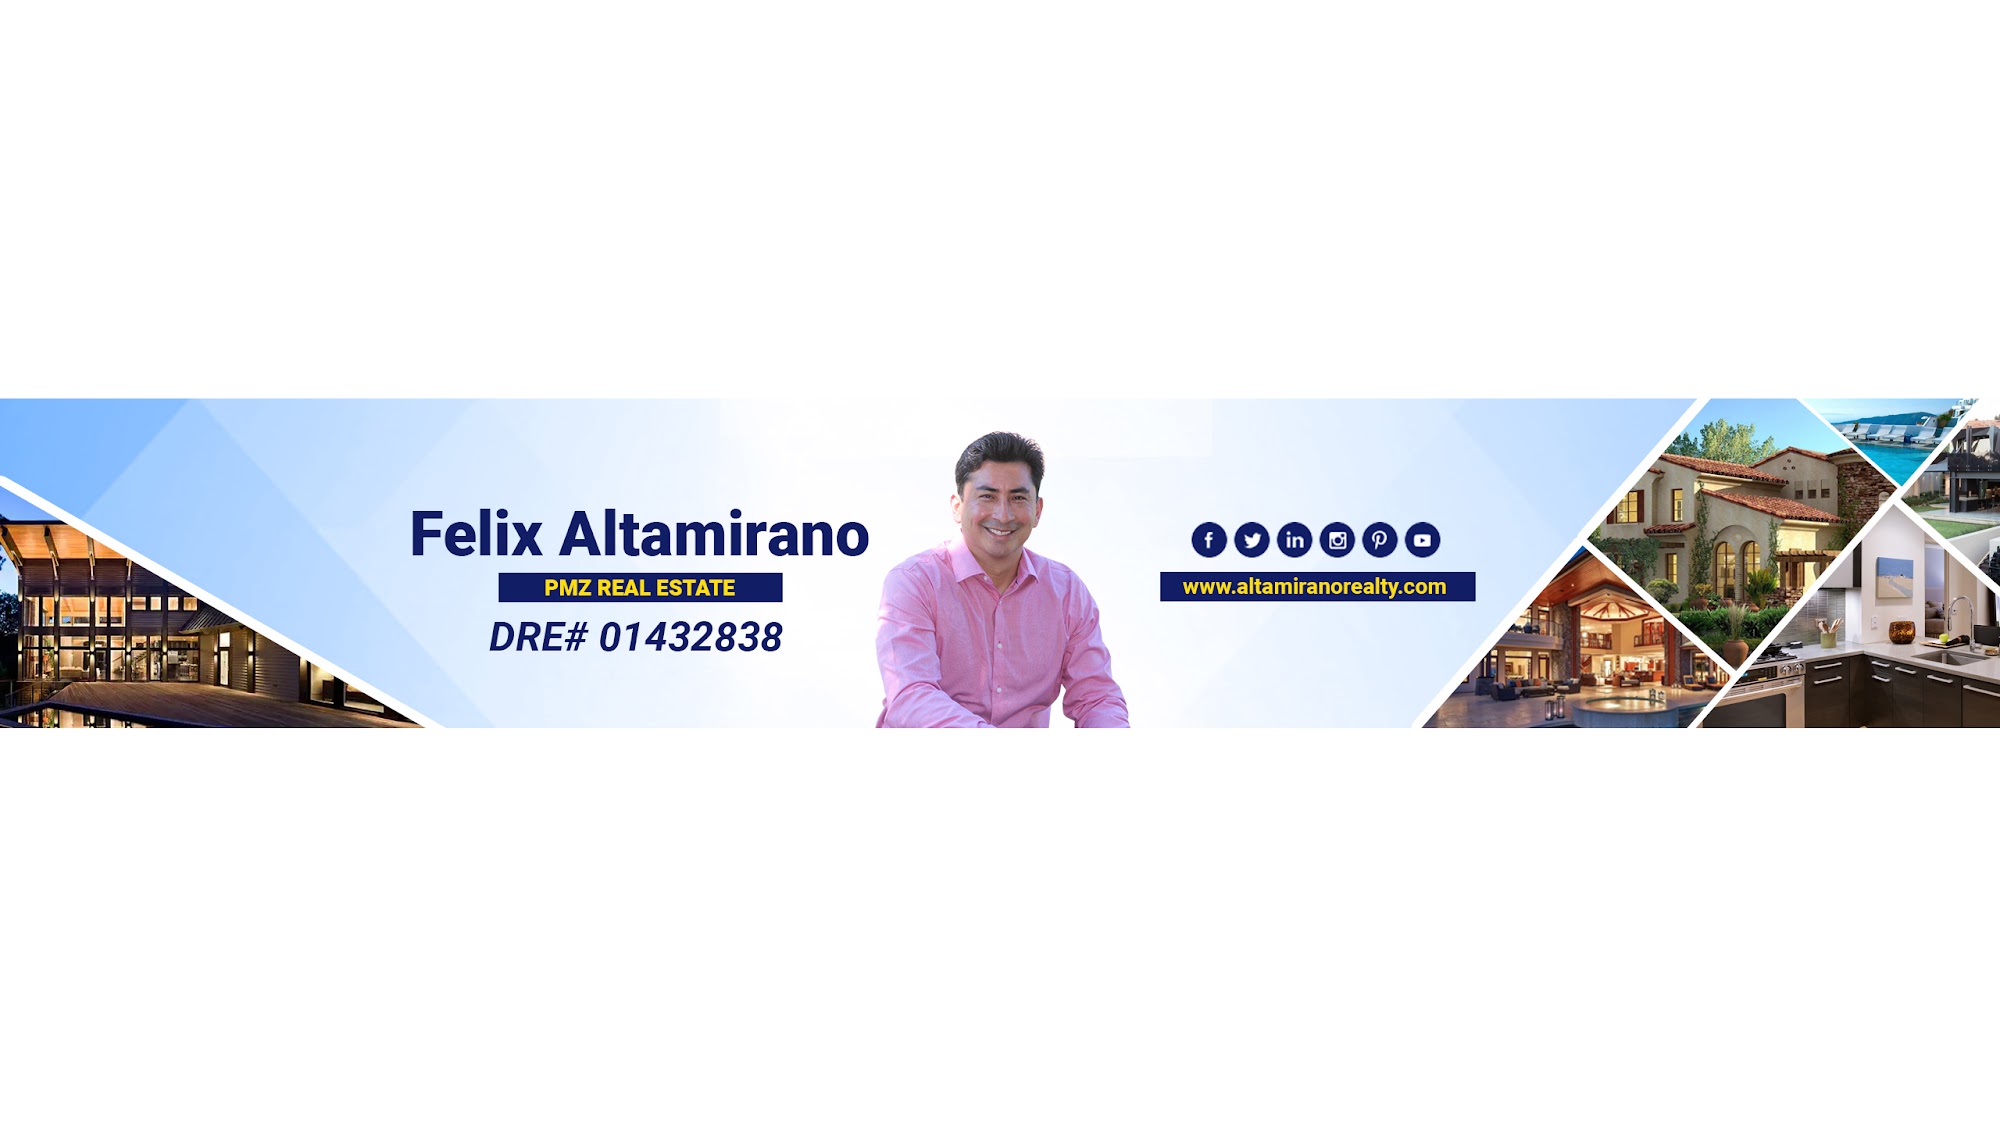 Felix Altamirano, Realtor, PMZ Real Estate, Dre#01432838